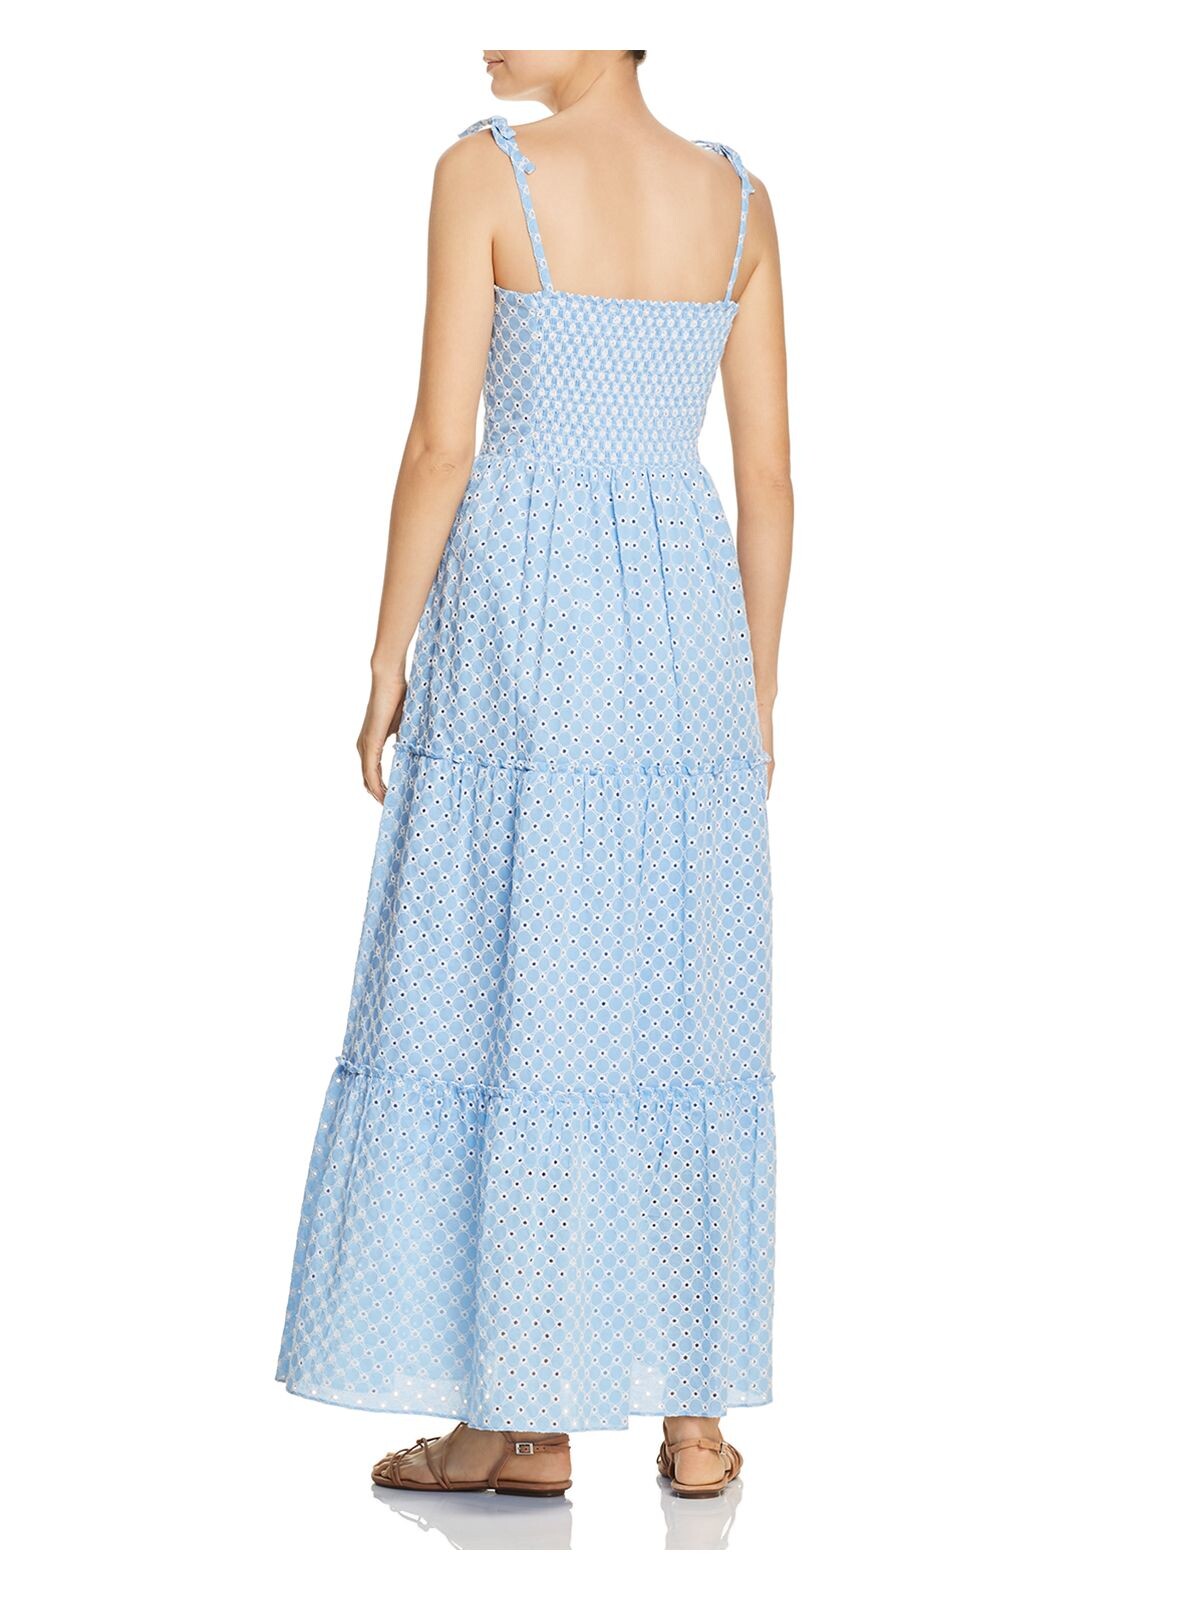 PALOMABLUE Womens Light Blue Spaghetti Strap Full-Length Ruffled Dress Size: L